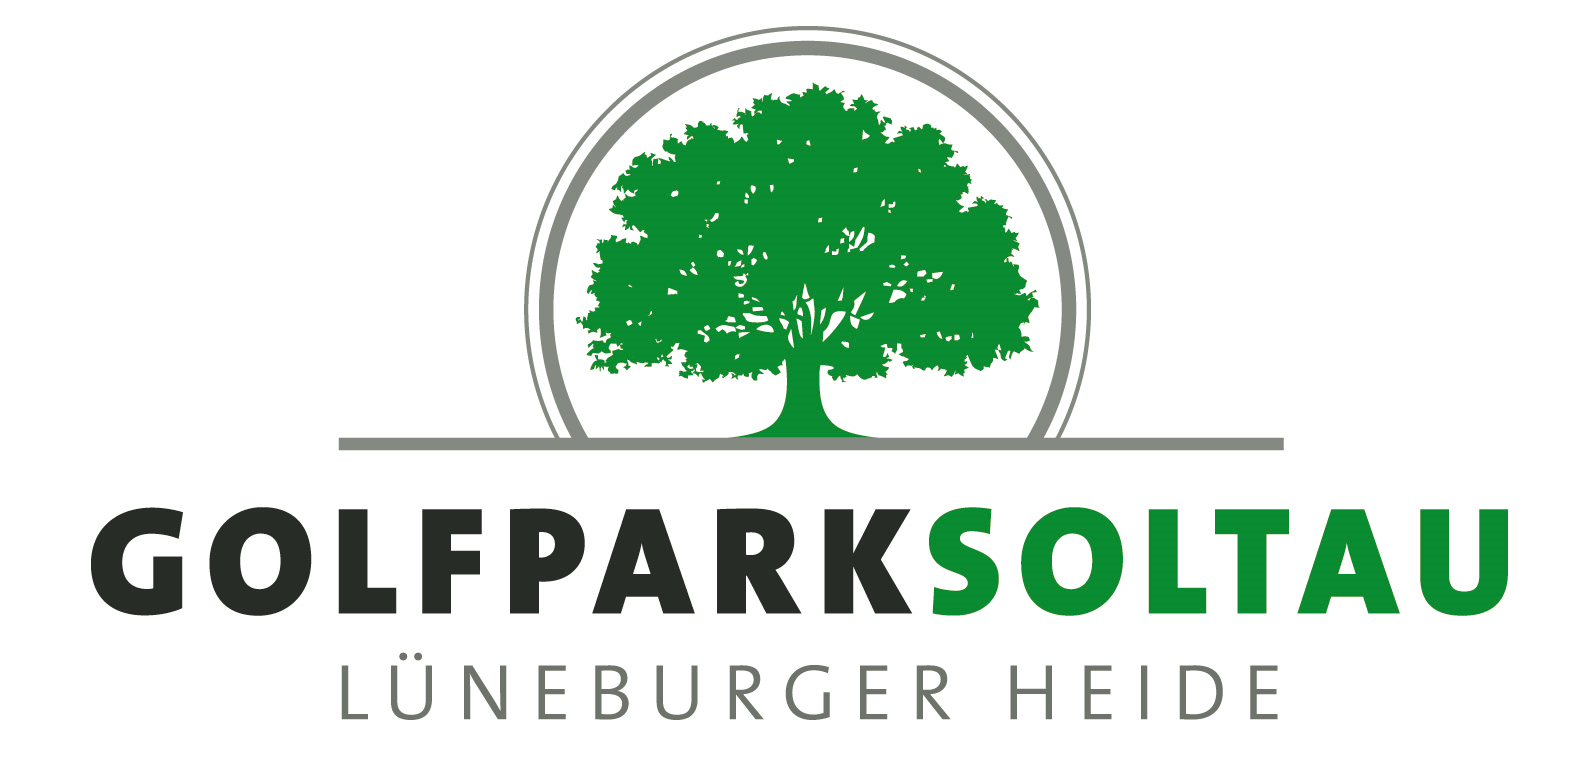 Golfpark Soltau Logo